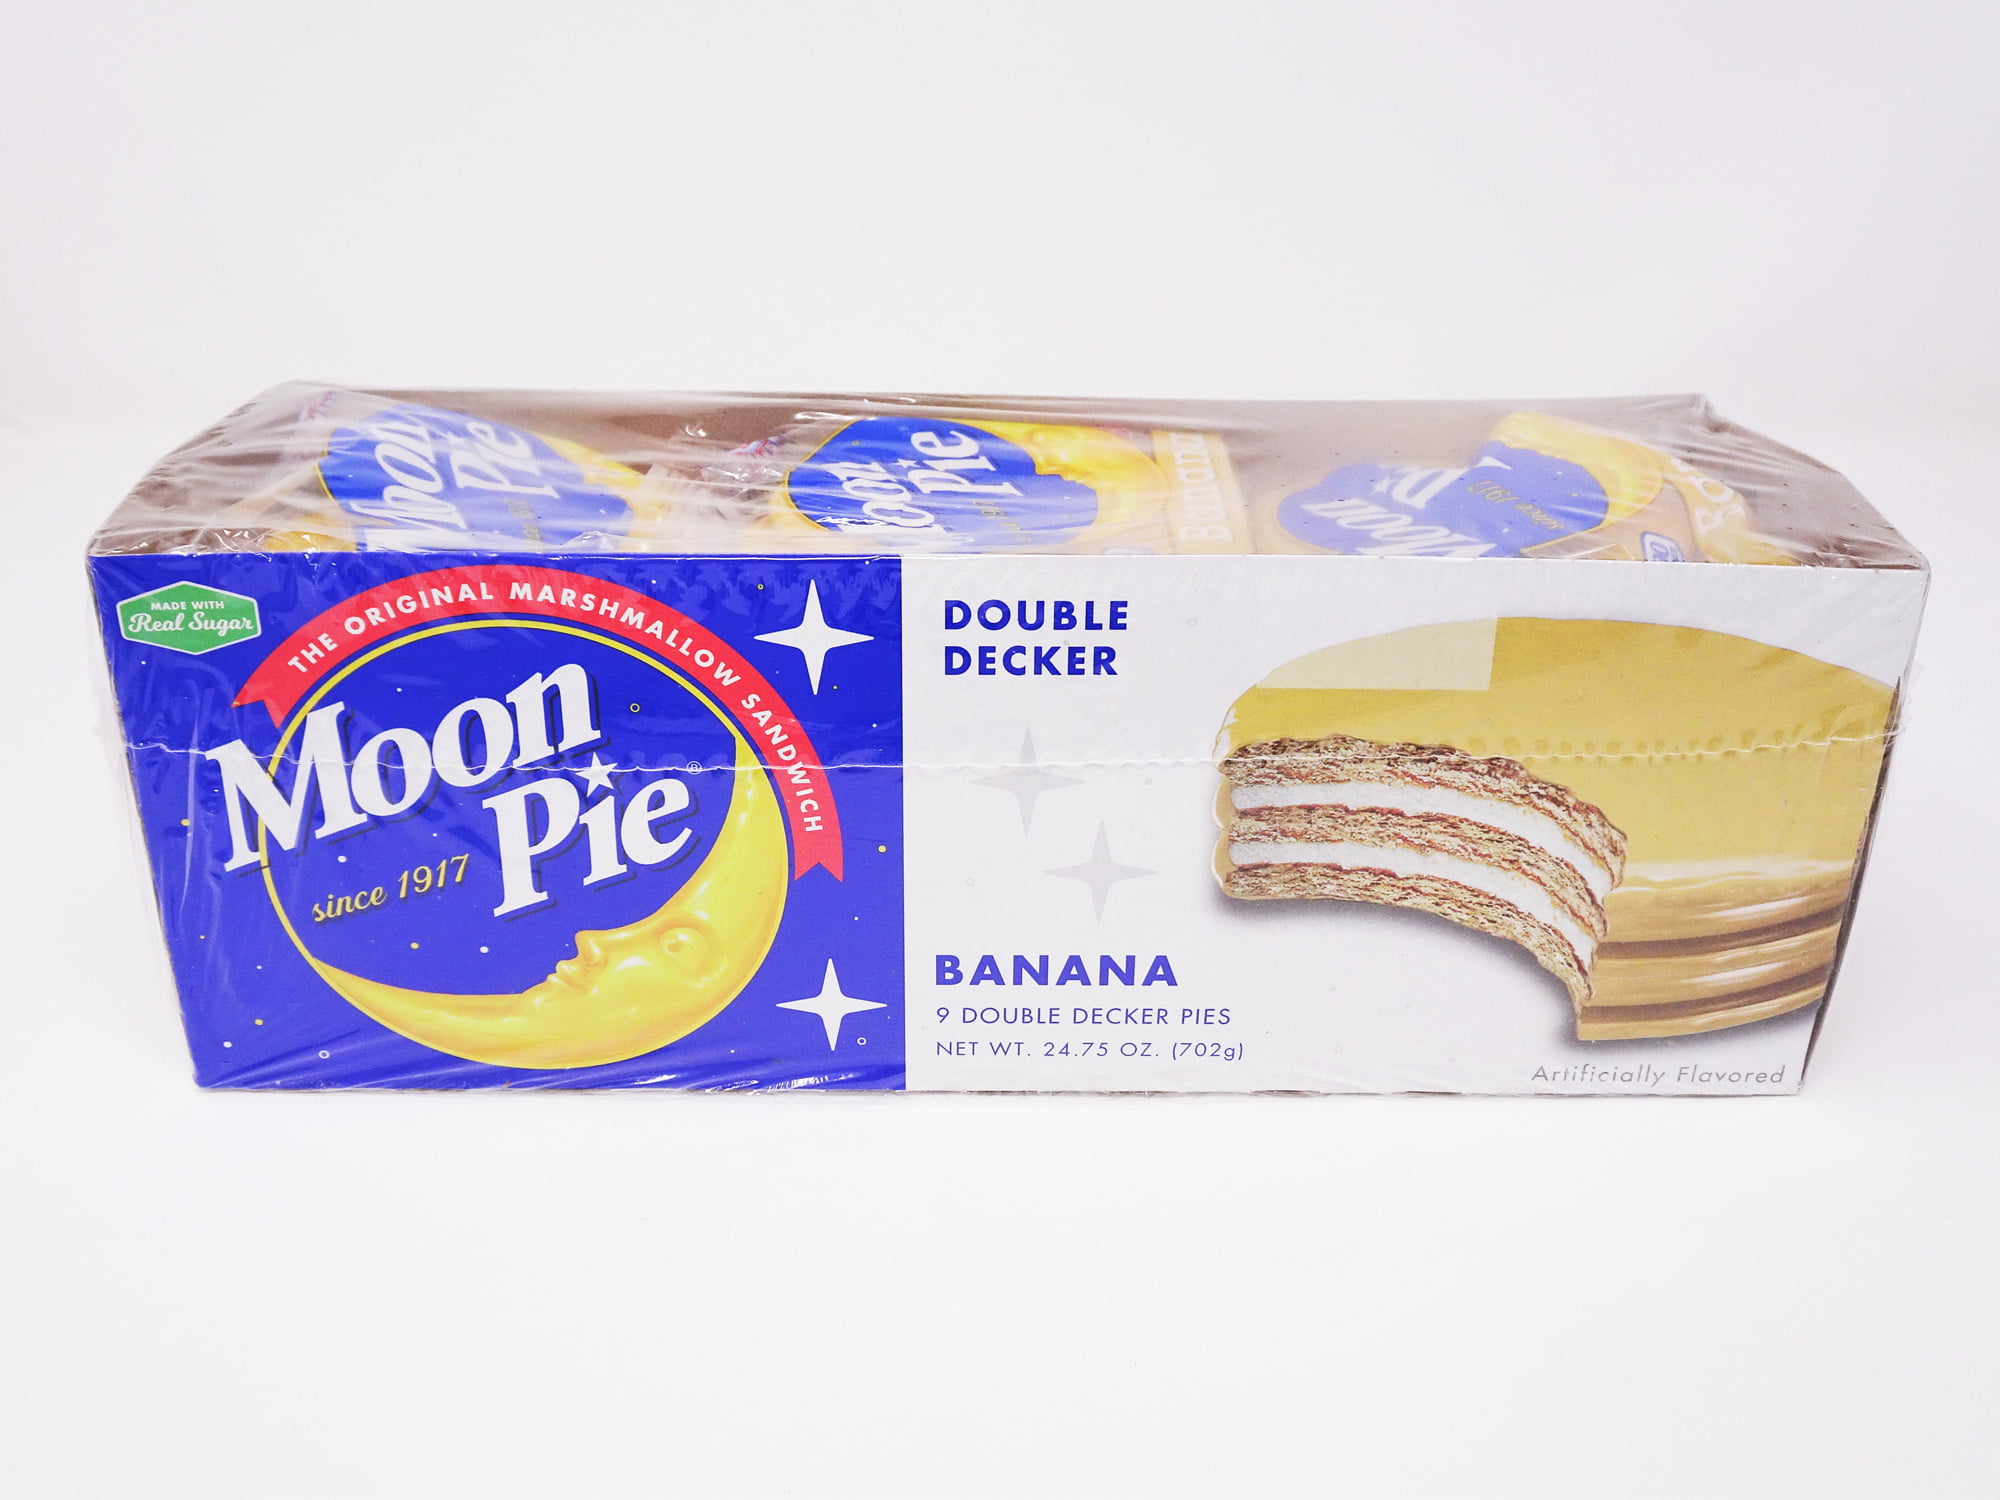 Печенье Moon pie состав. Moon pie. Moon pie Double Decker как на упаковке Тип продукта. Moon pie Double Decker отзывы покупателей. Состав пая